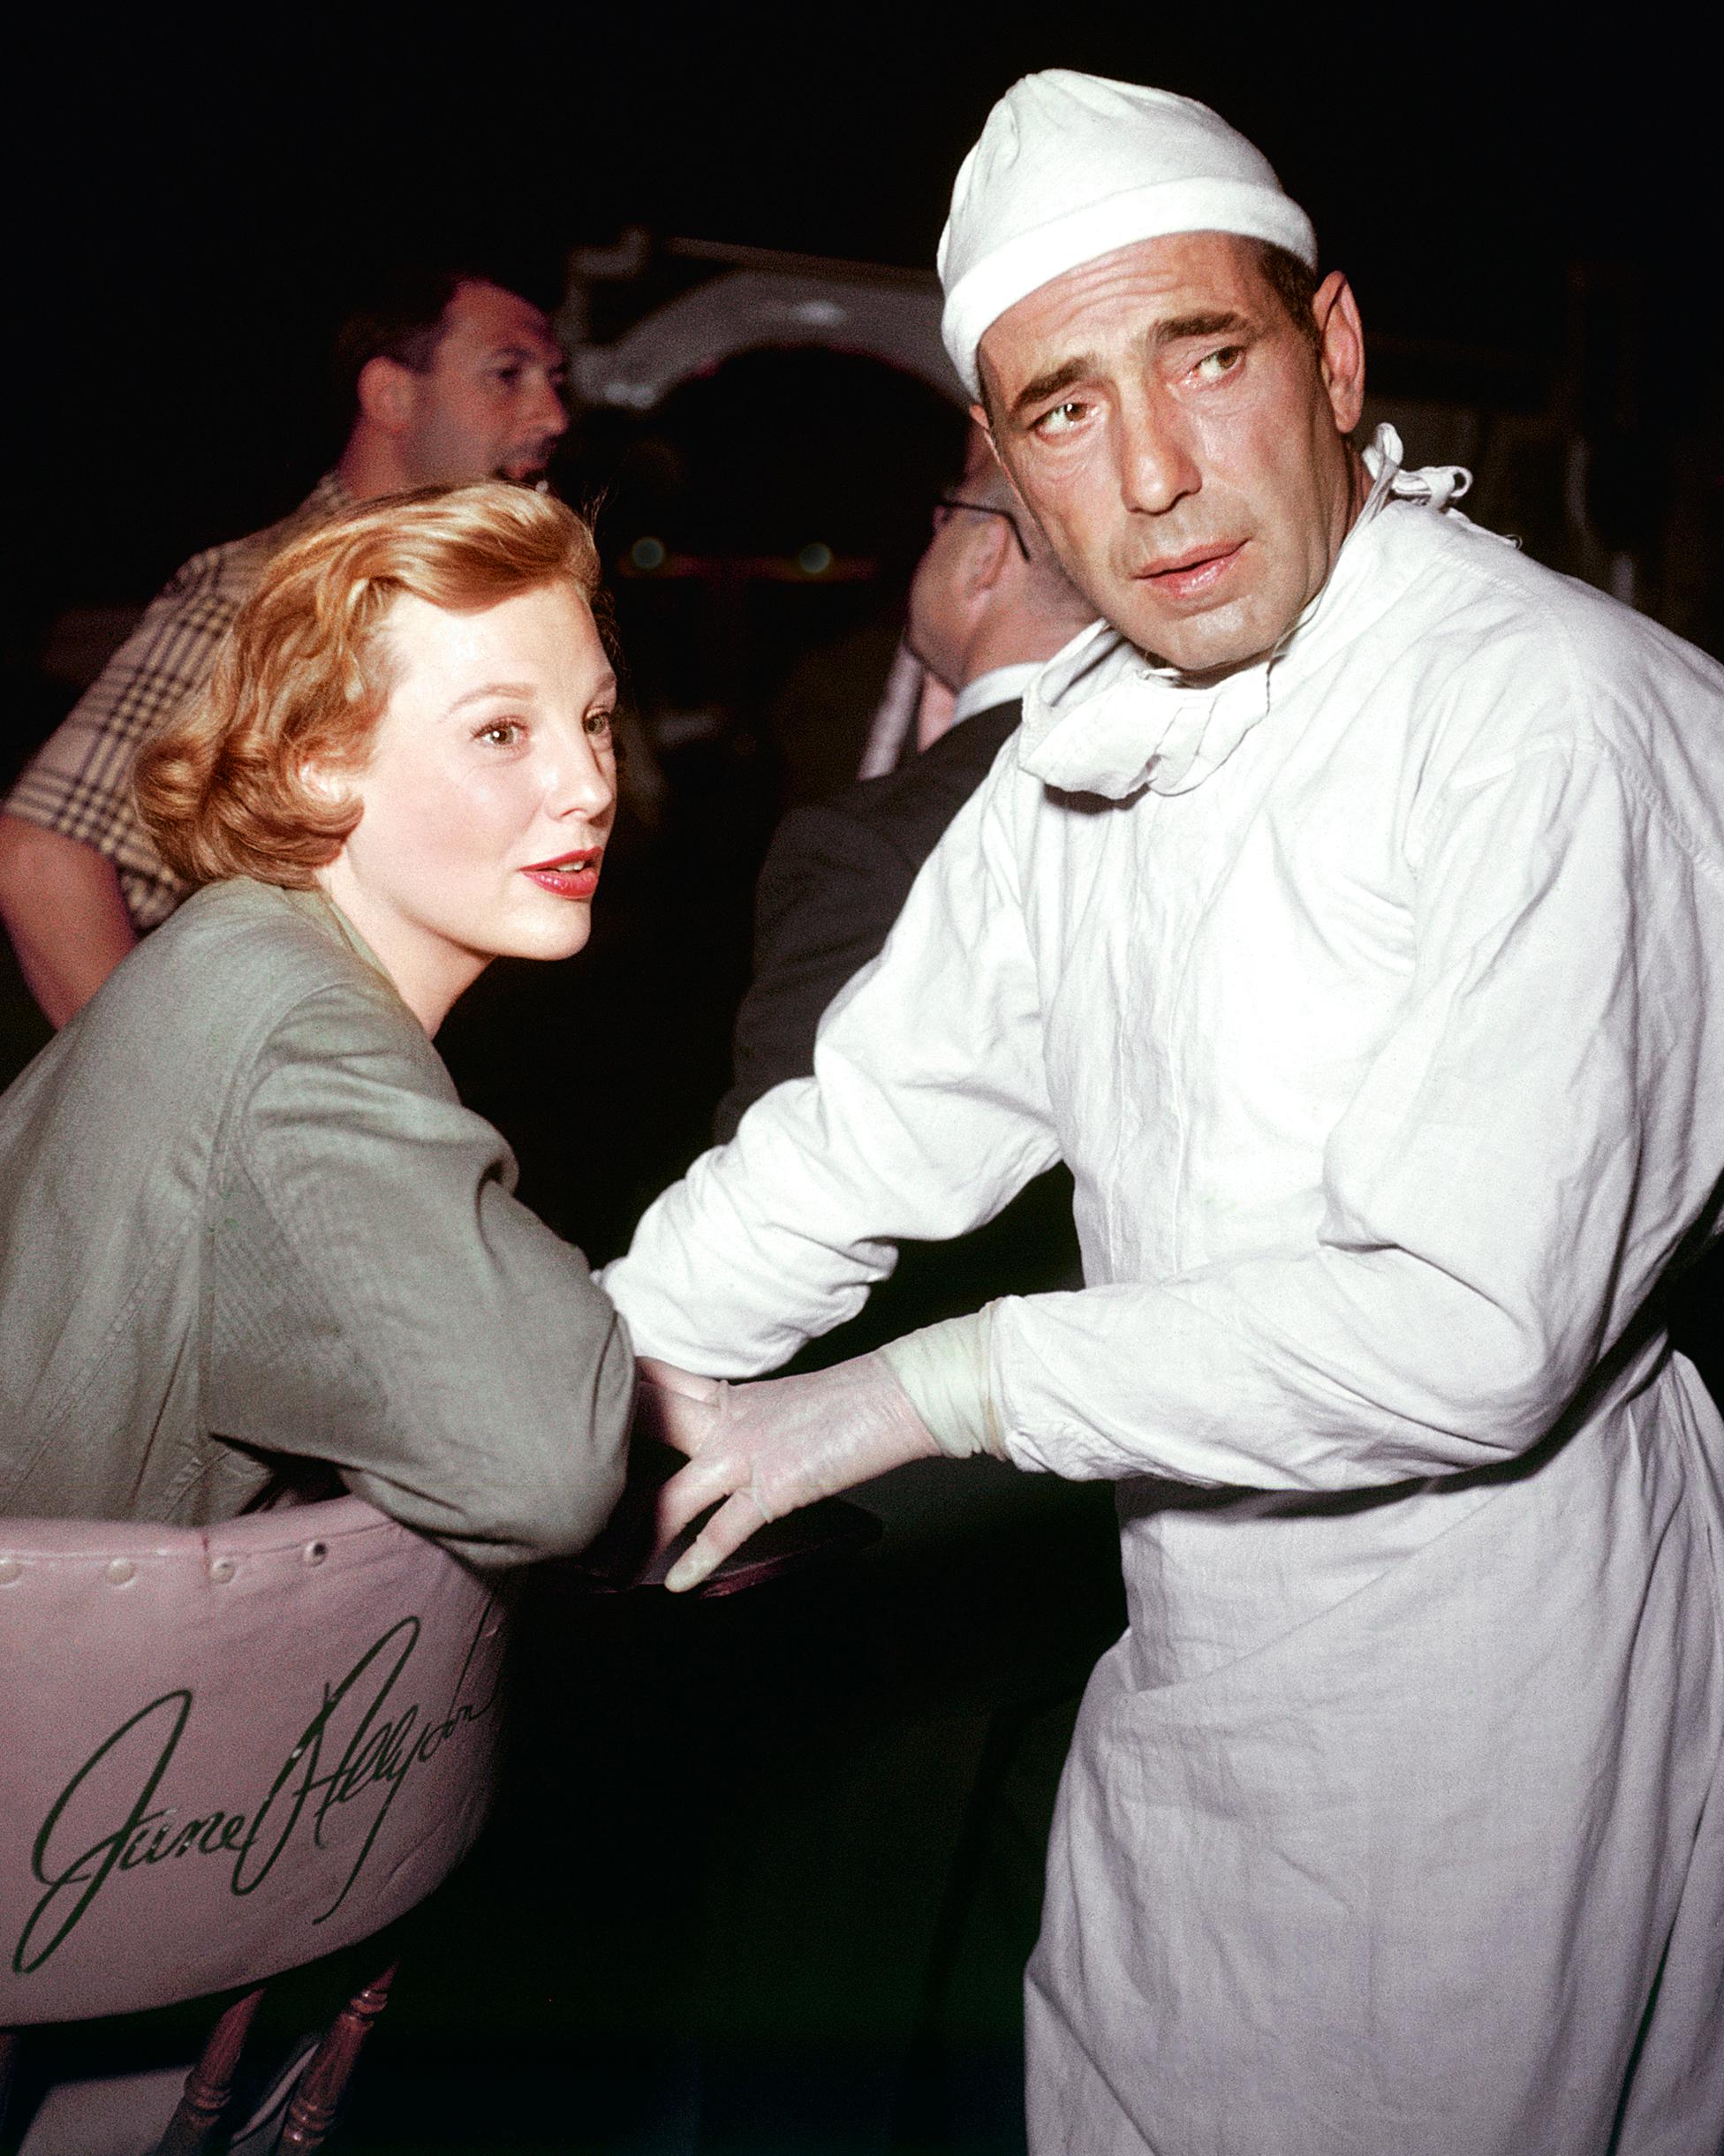 Portrait Photograph de Frank Worth - Humphrey Bogart y June Allyson en el plató